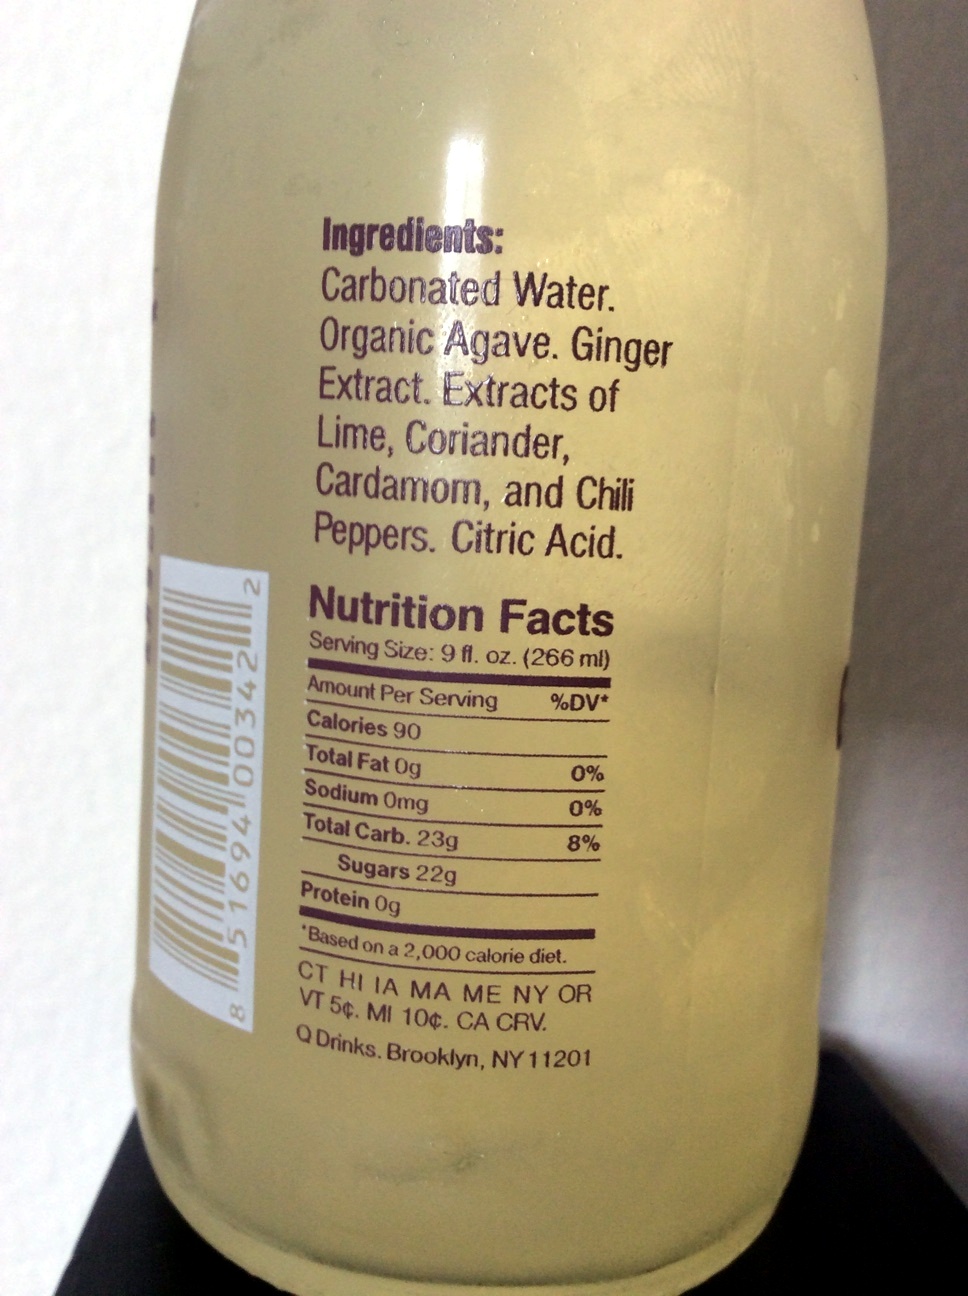 Ginger beer - Ingredients